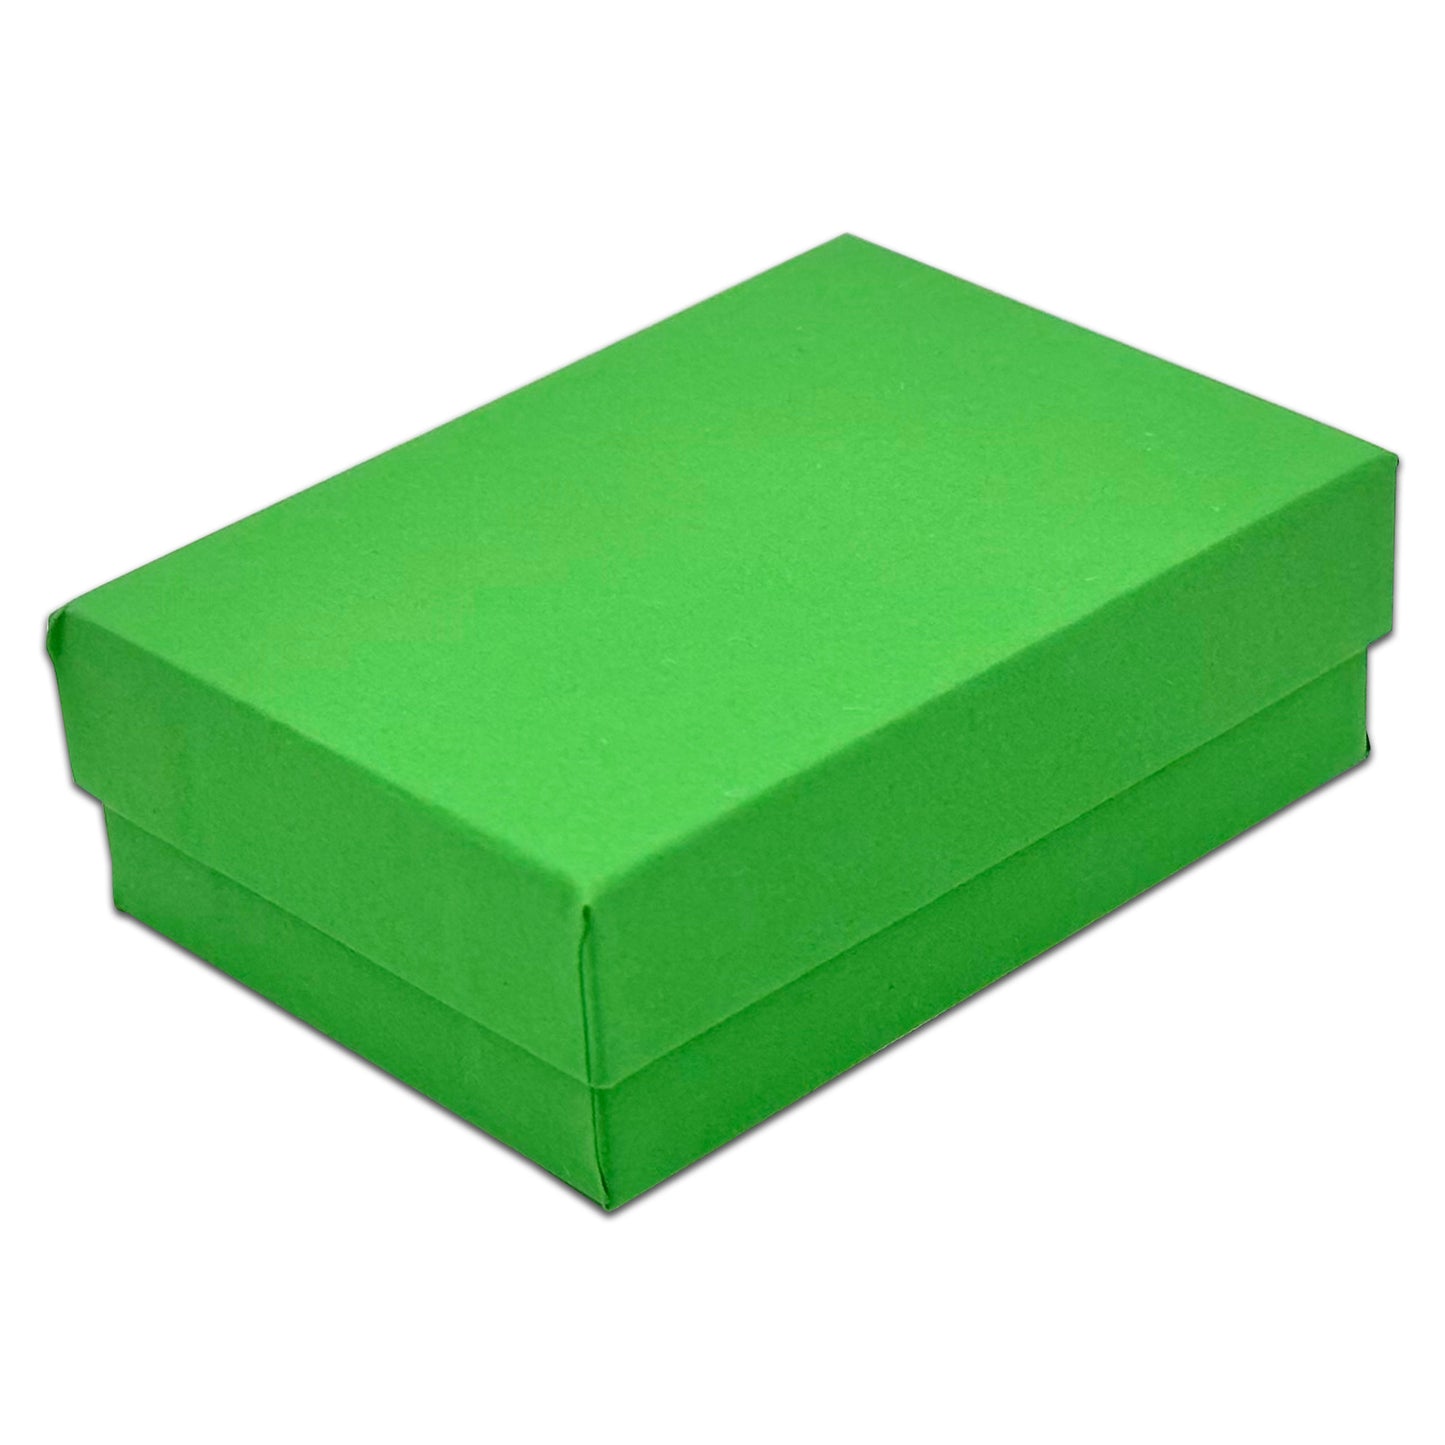 3 1/4" x 2 1/4" x 1" Light Green Cotton Filled Paper Box